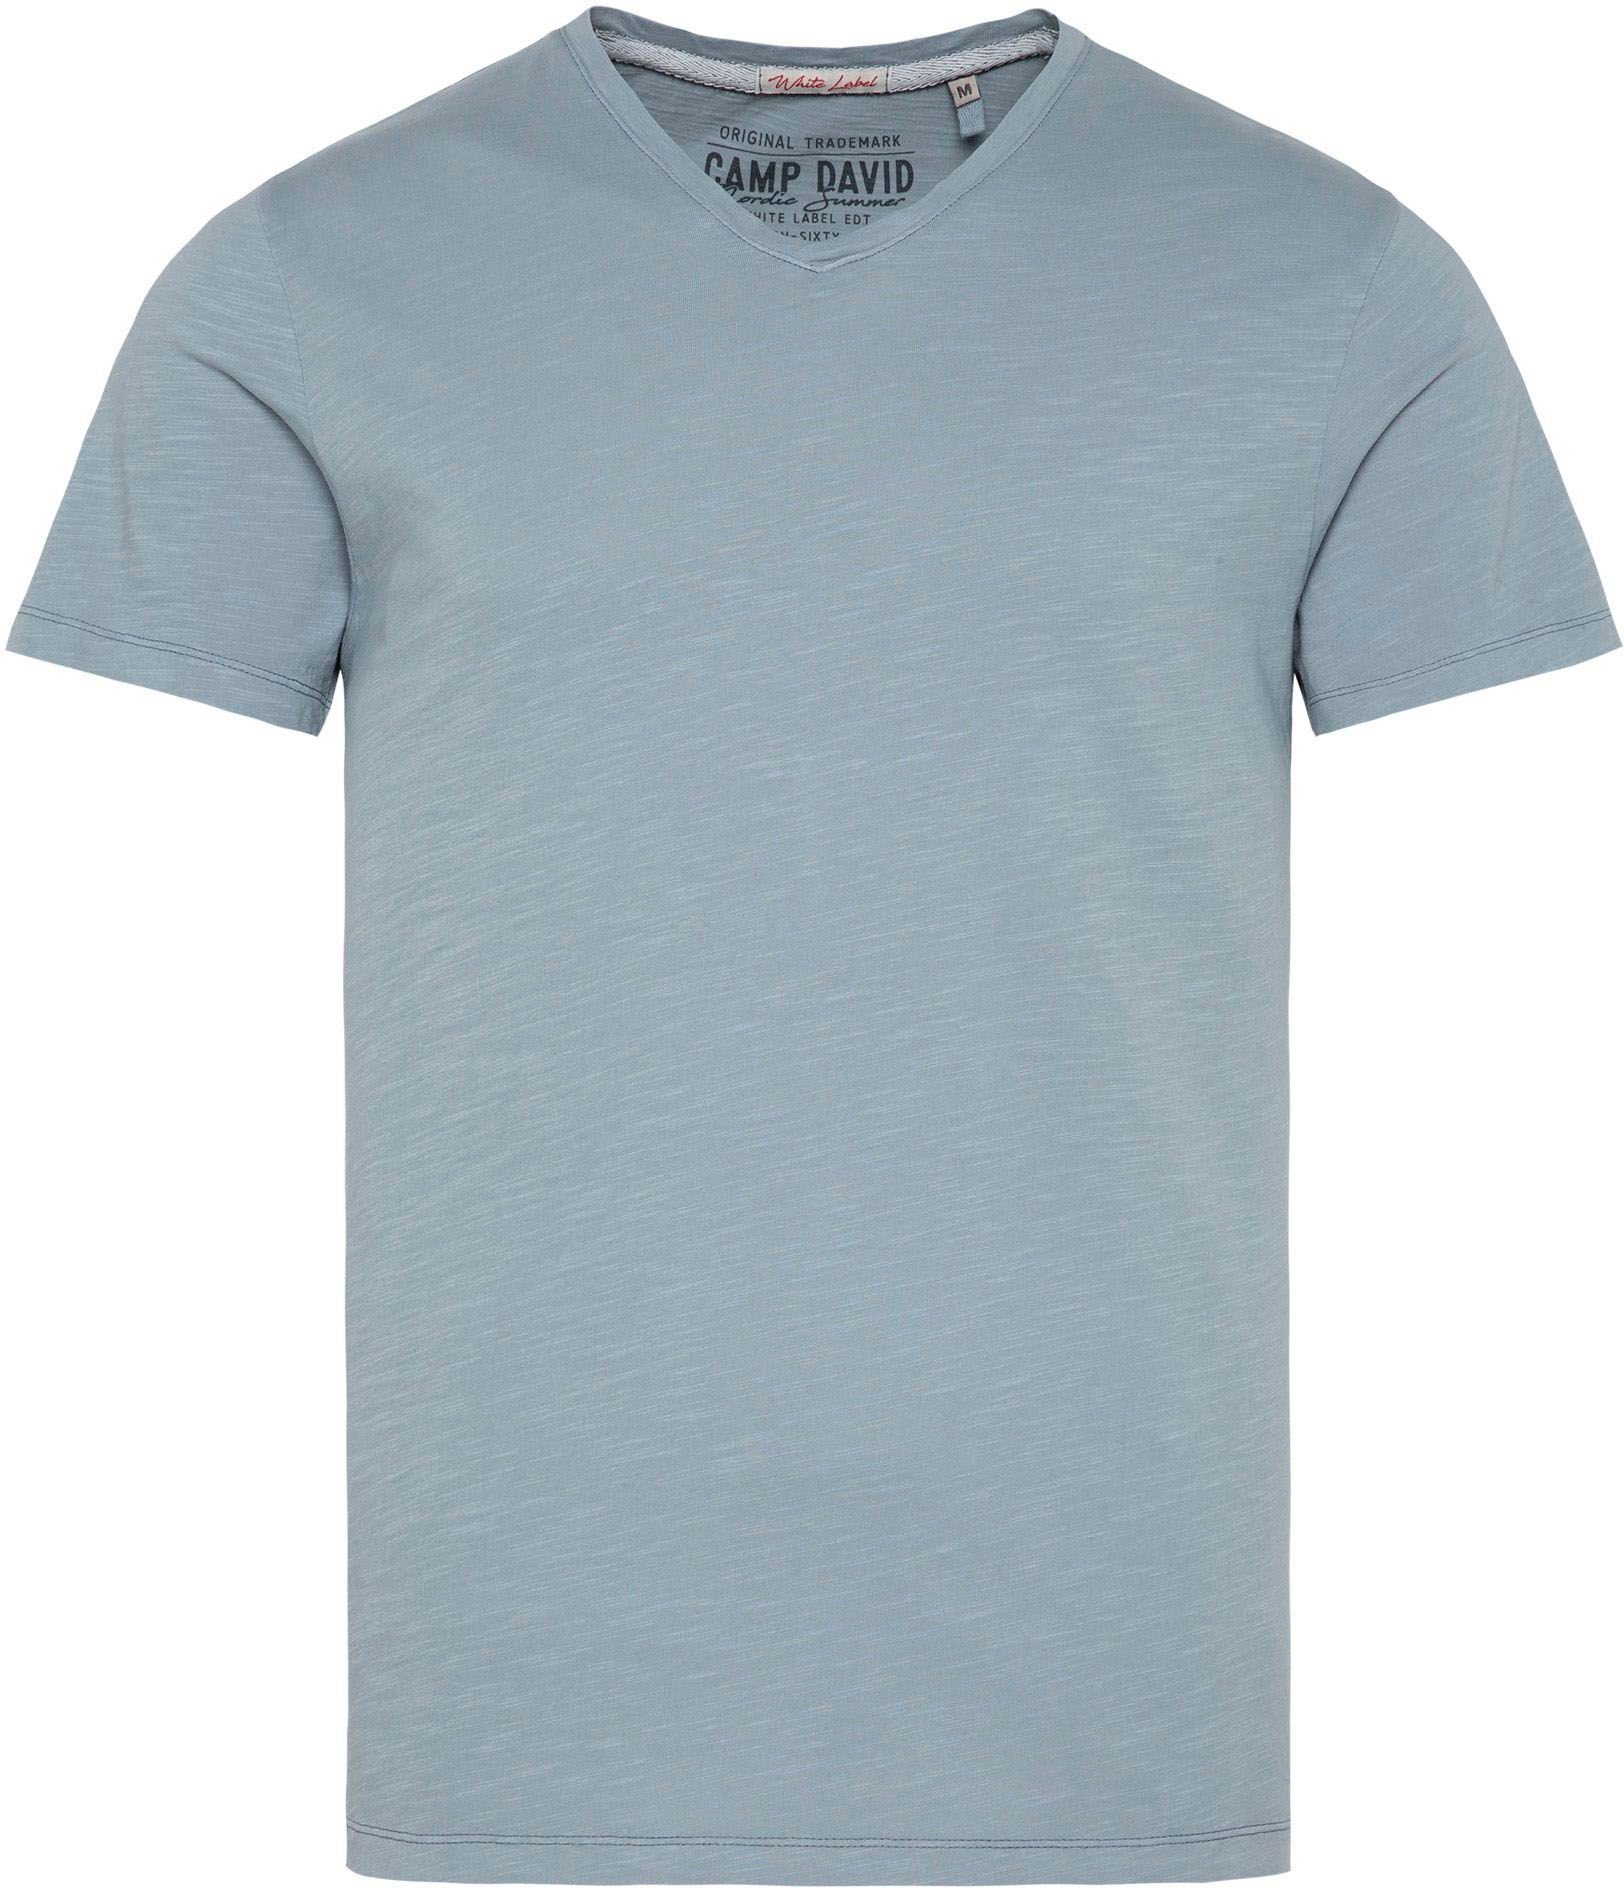 DAVID CAMP T-Shirt concrete grey mit Logoprägung